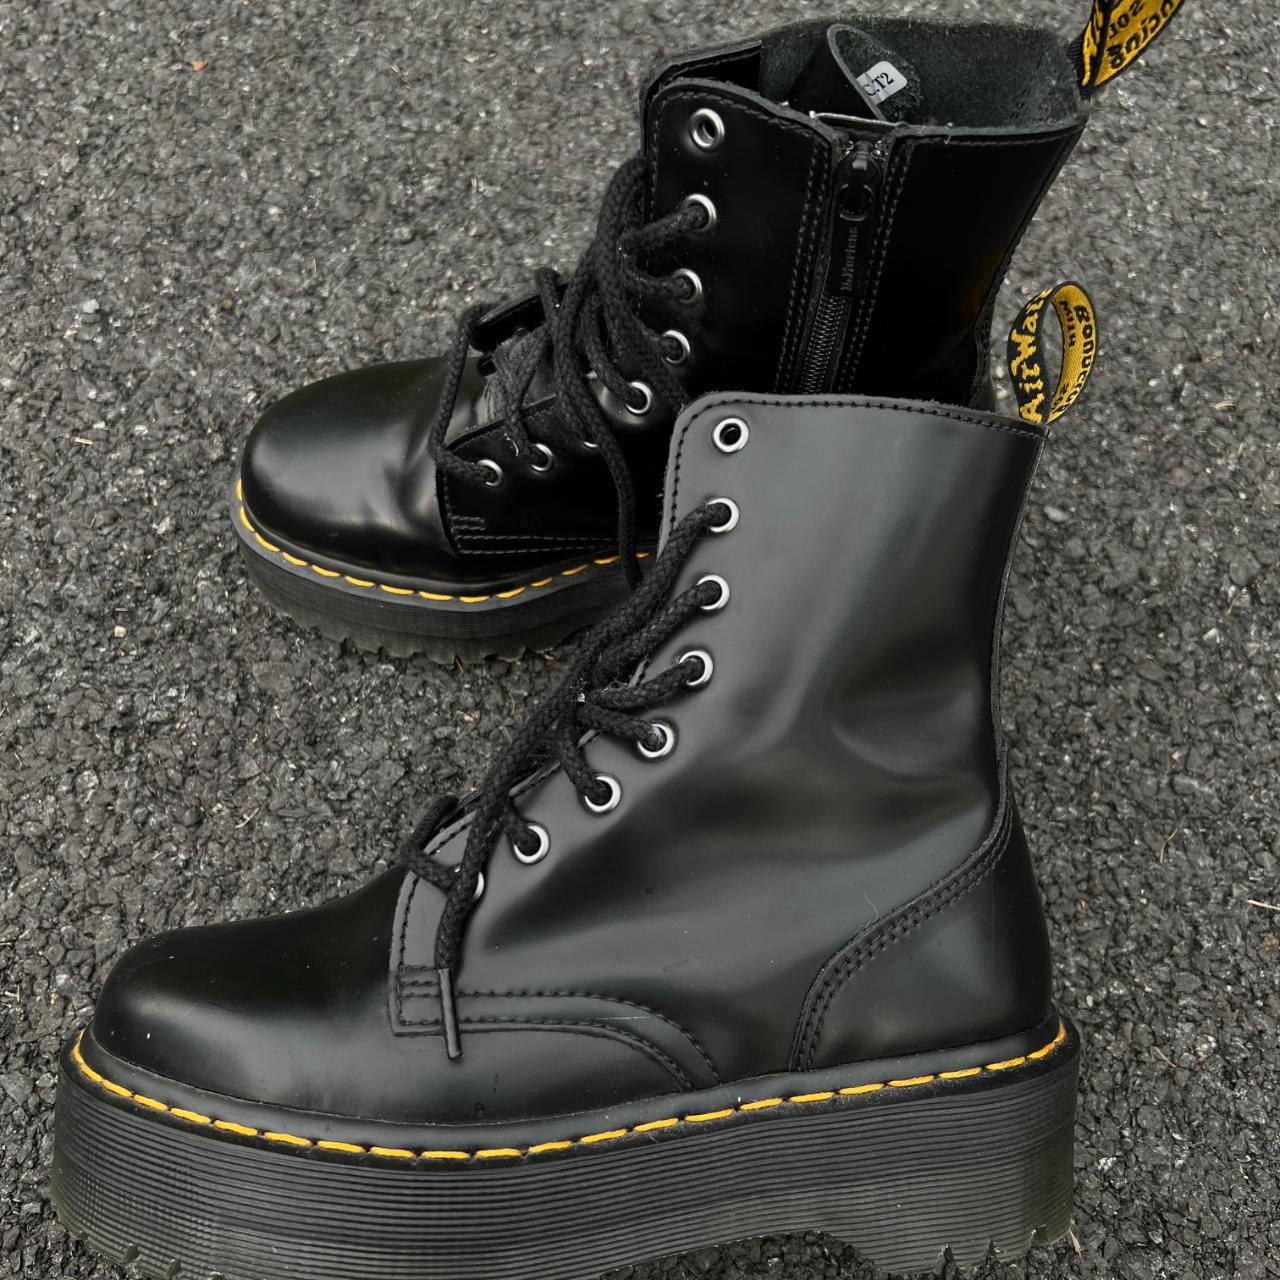 Jadon Boot Smooth Leather Platforms, Black